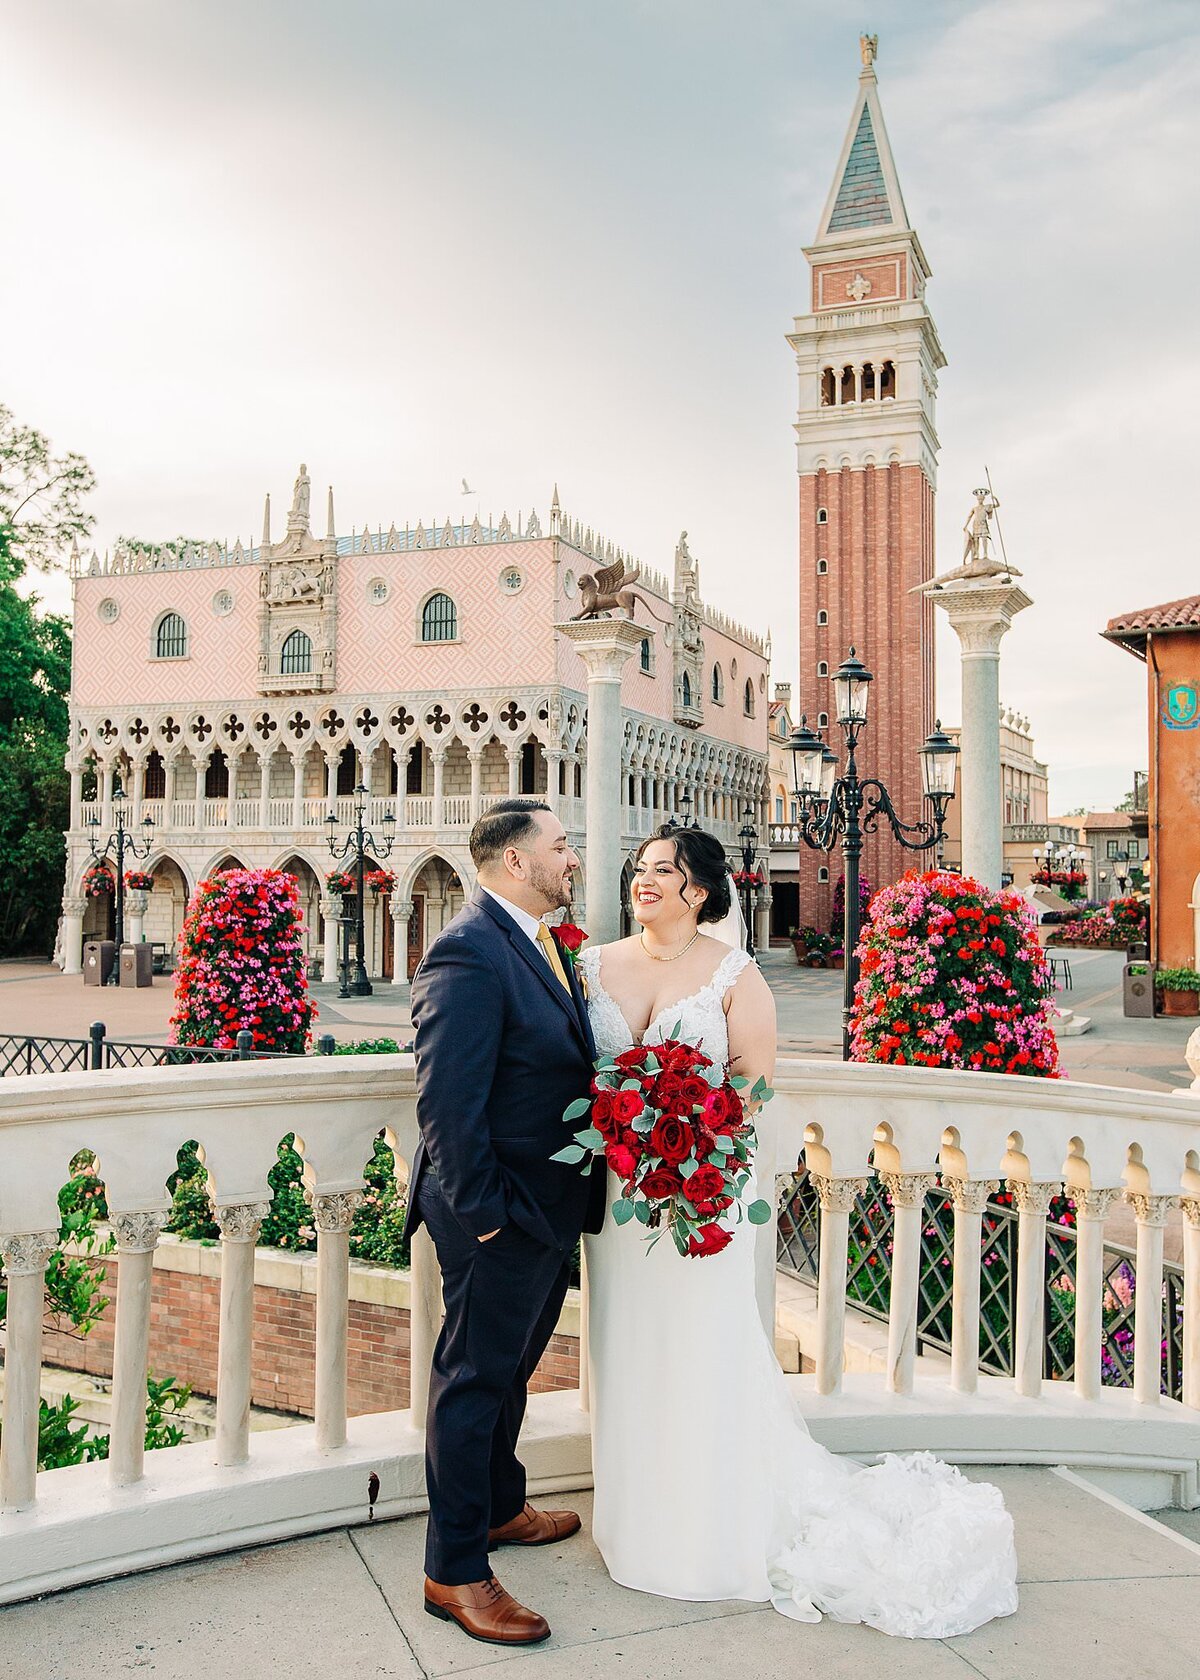 Newlywed couple posing on bridge in Italy Isola at Disney's Epcot